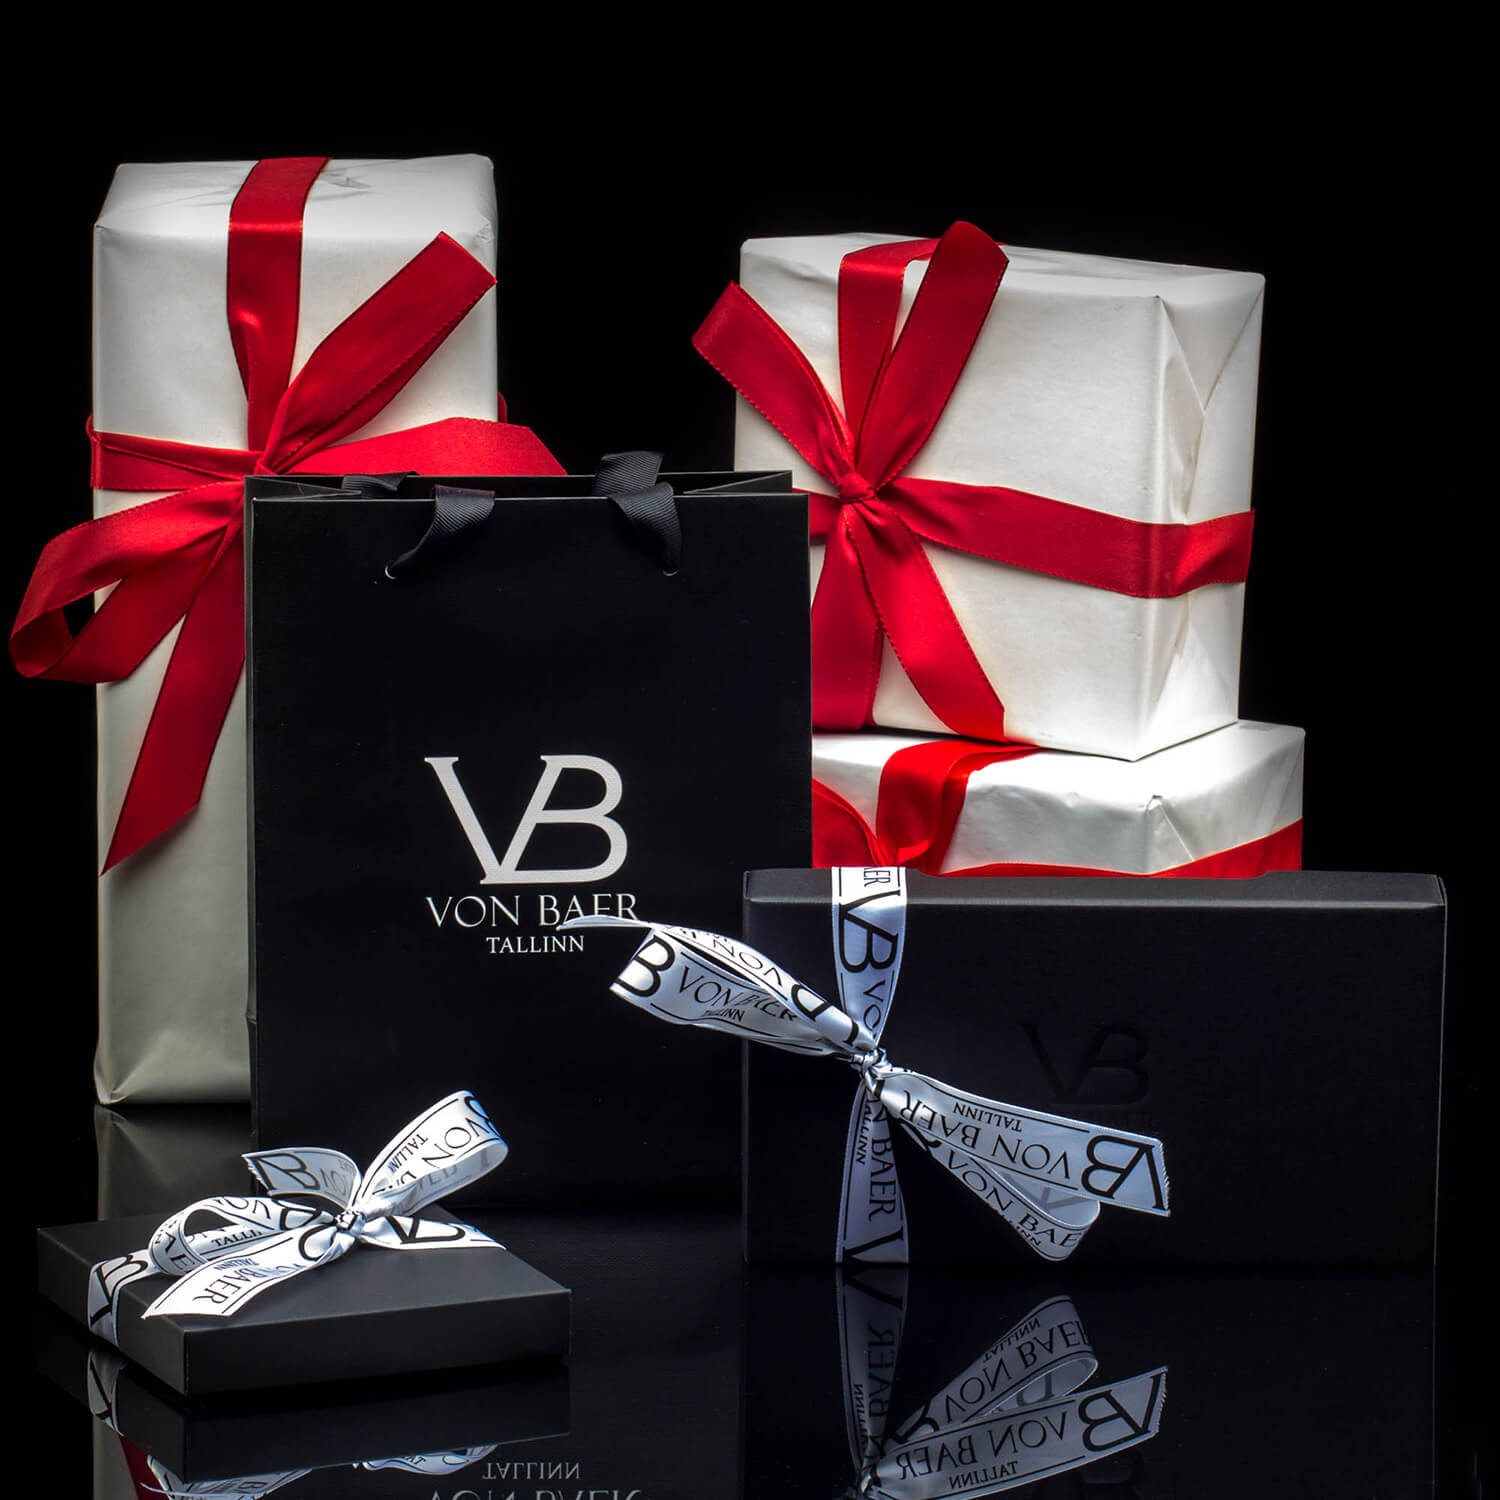 Luxury Gifts Under $500 To Treat a Special Someone in 2023 - Von Baer